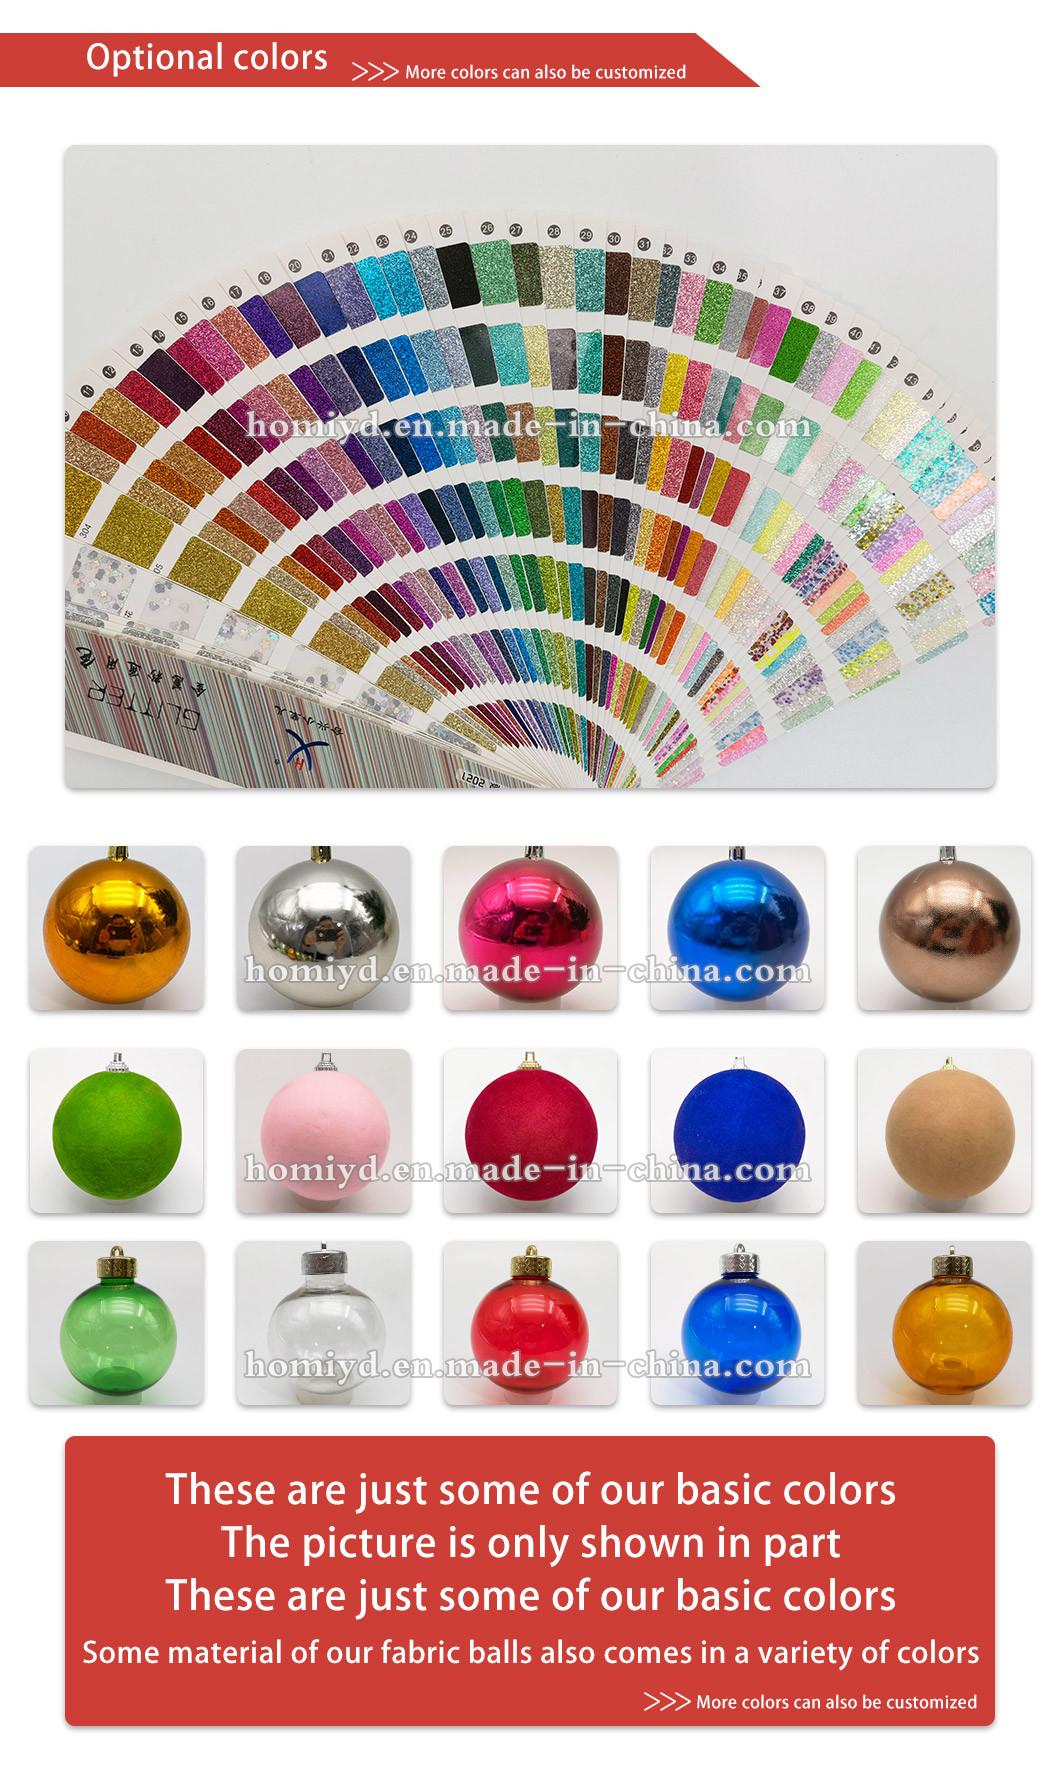 Color Optional Christmas Balls 25mm to 600mm Polyfoam Balls Christmas Decorations